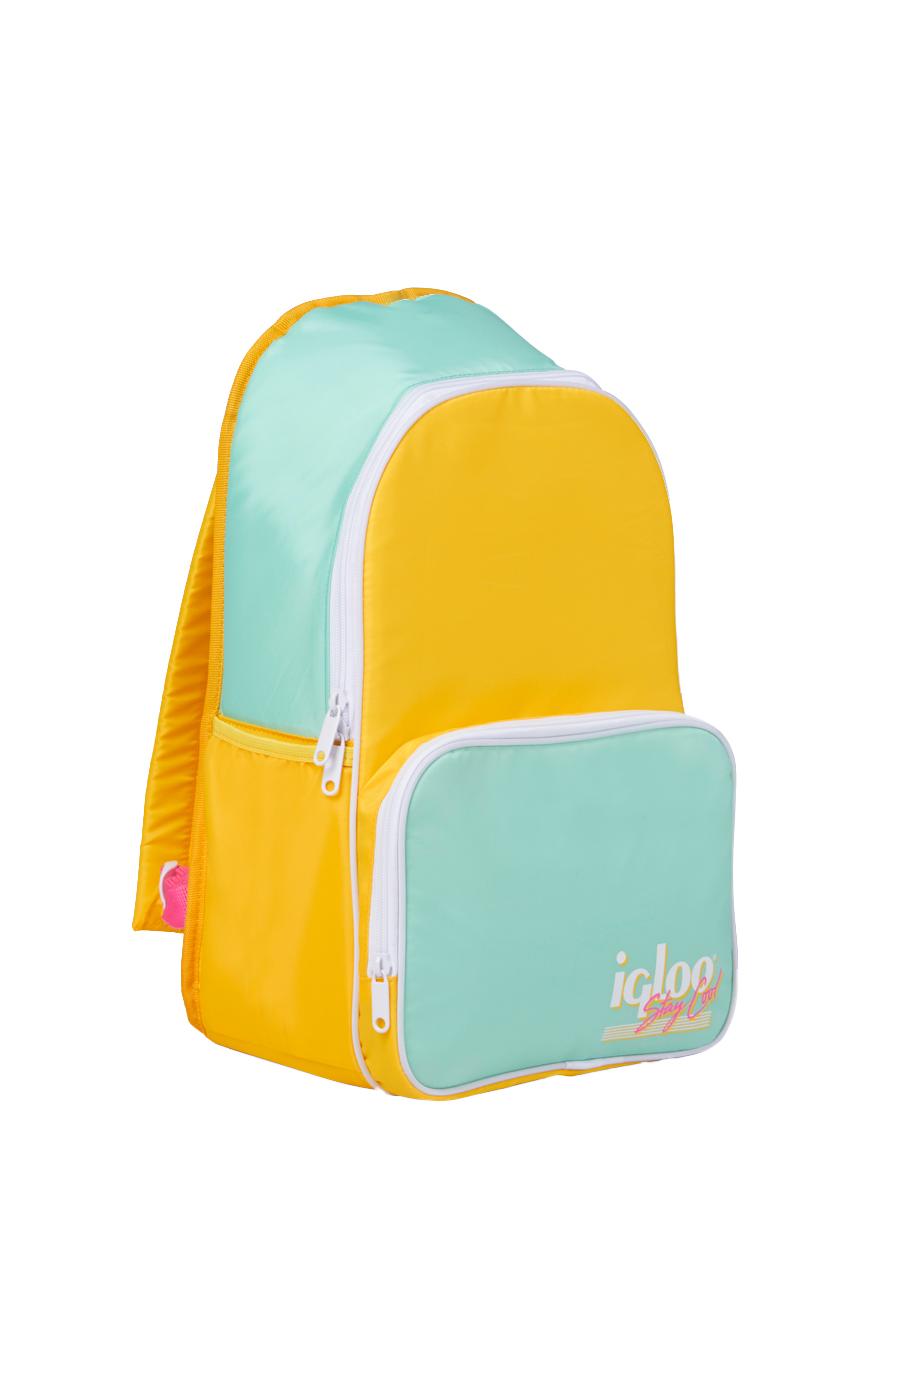 Igloo Retro Backpack Cooler - Yellow/Mint; image 3 of 3